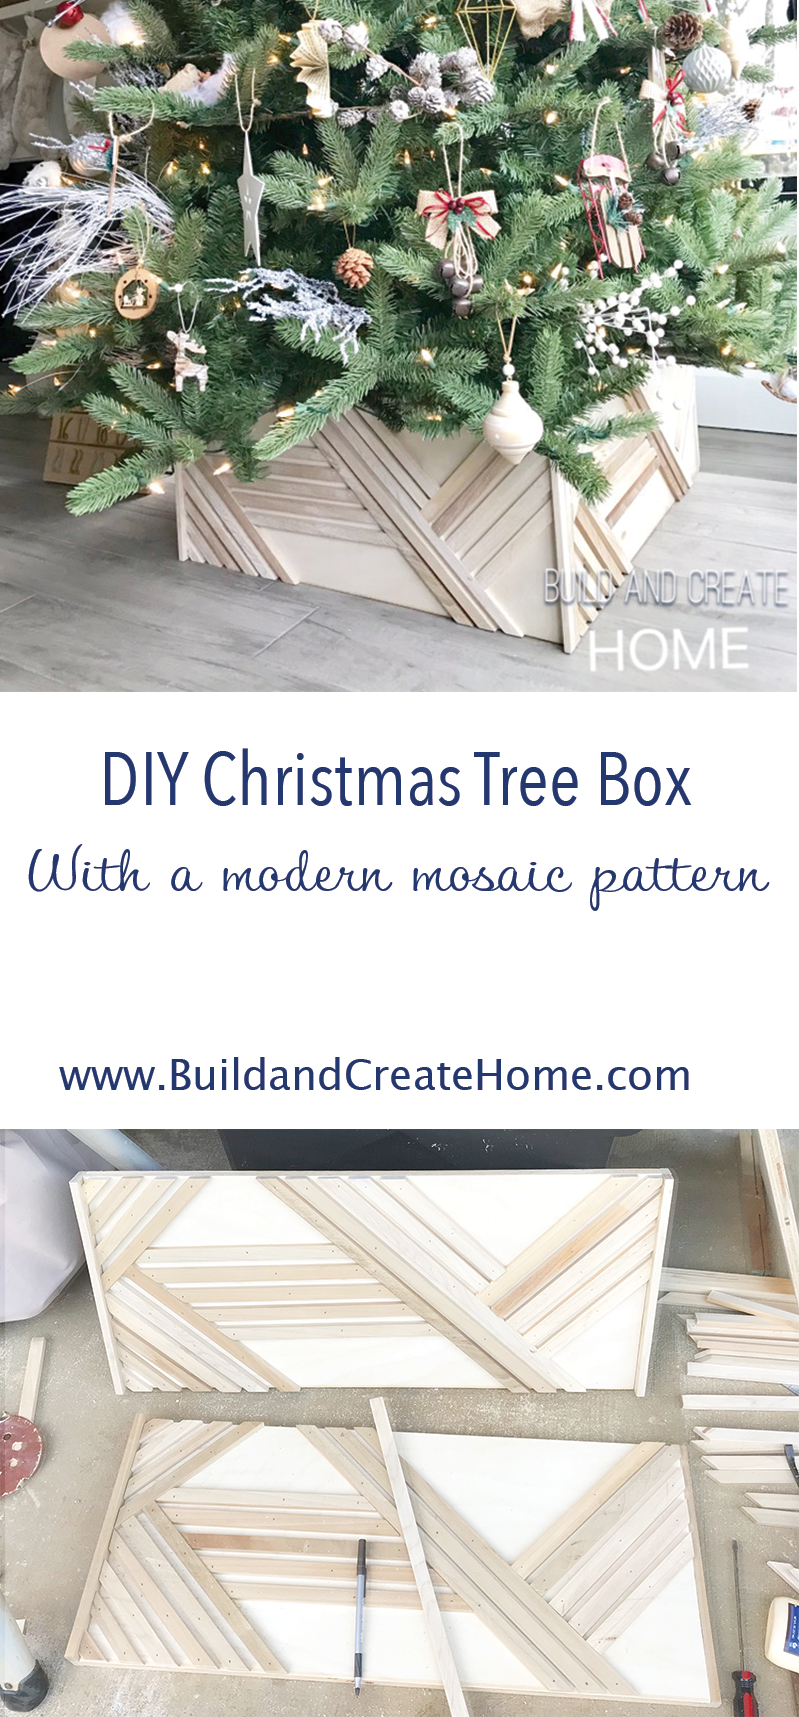 How to build a modern mosaic Christmas Tree box